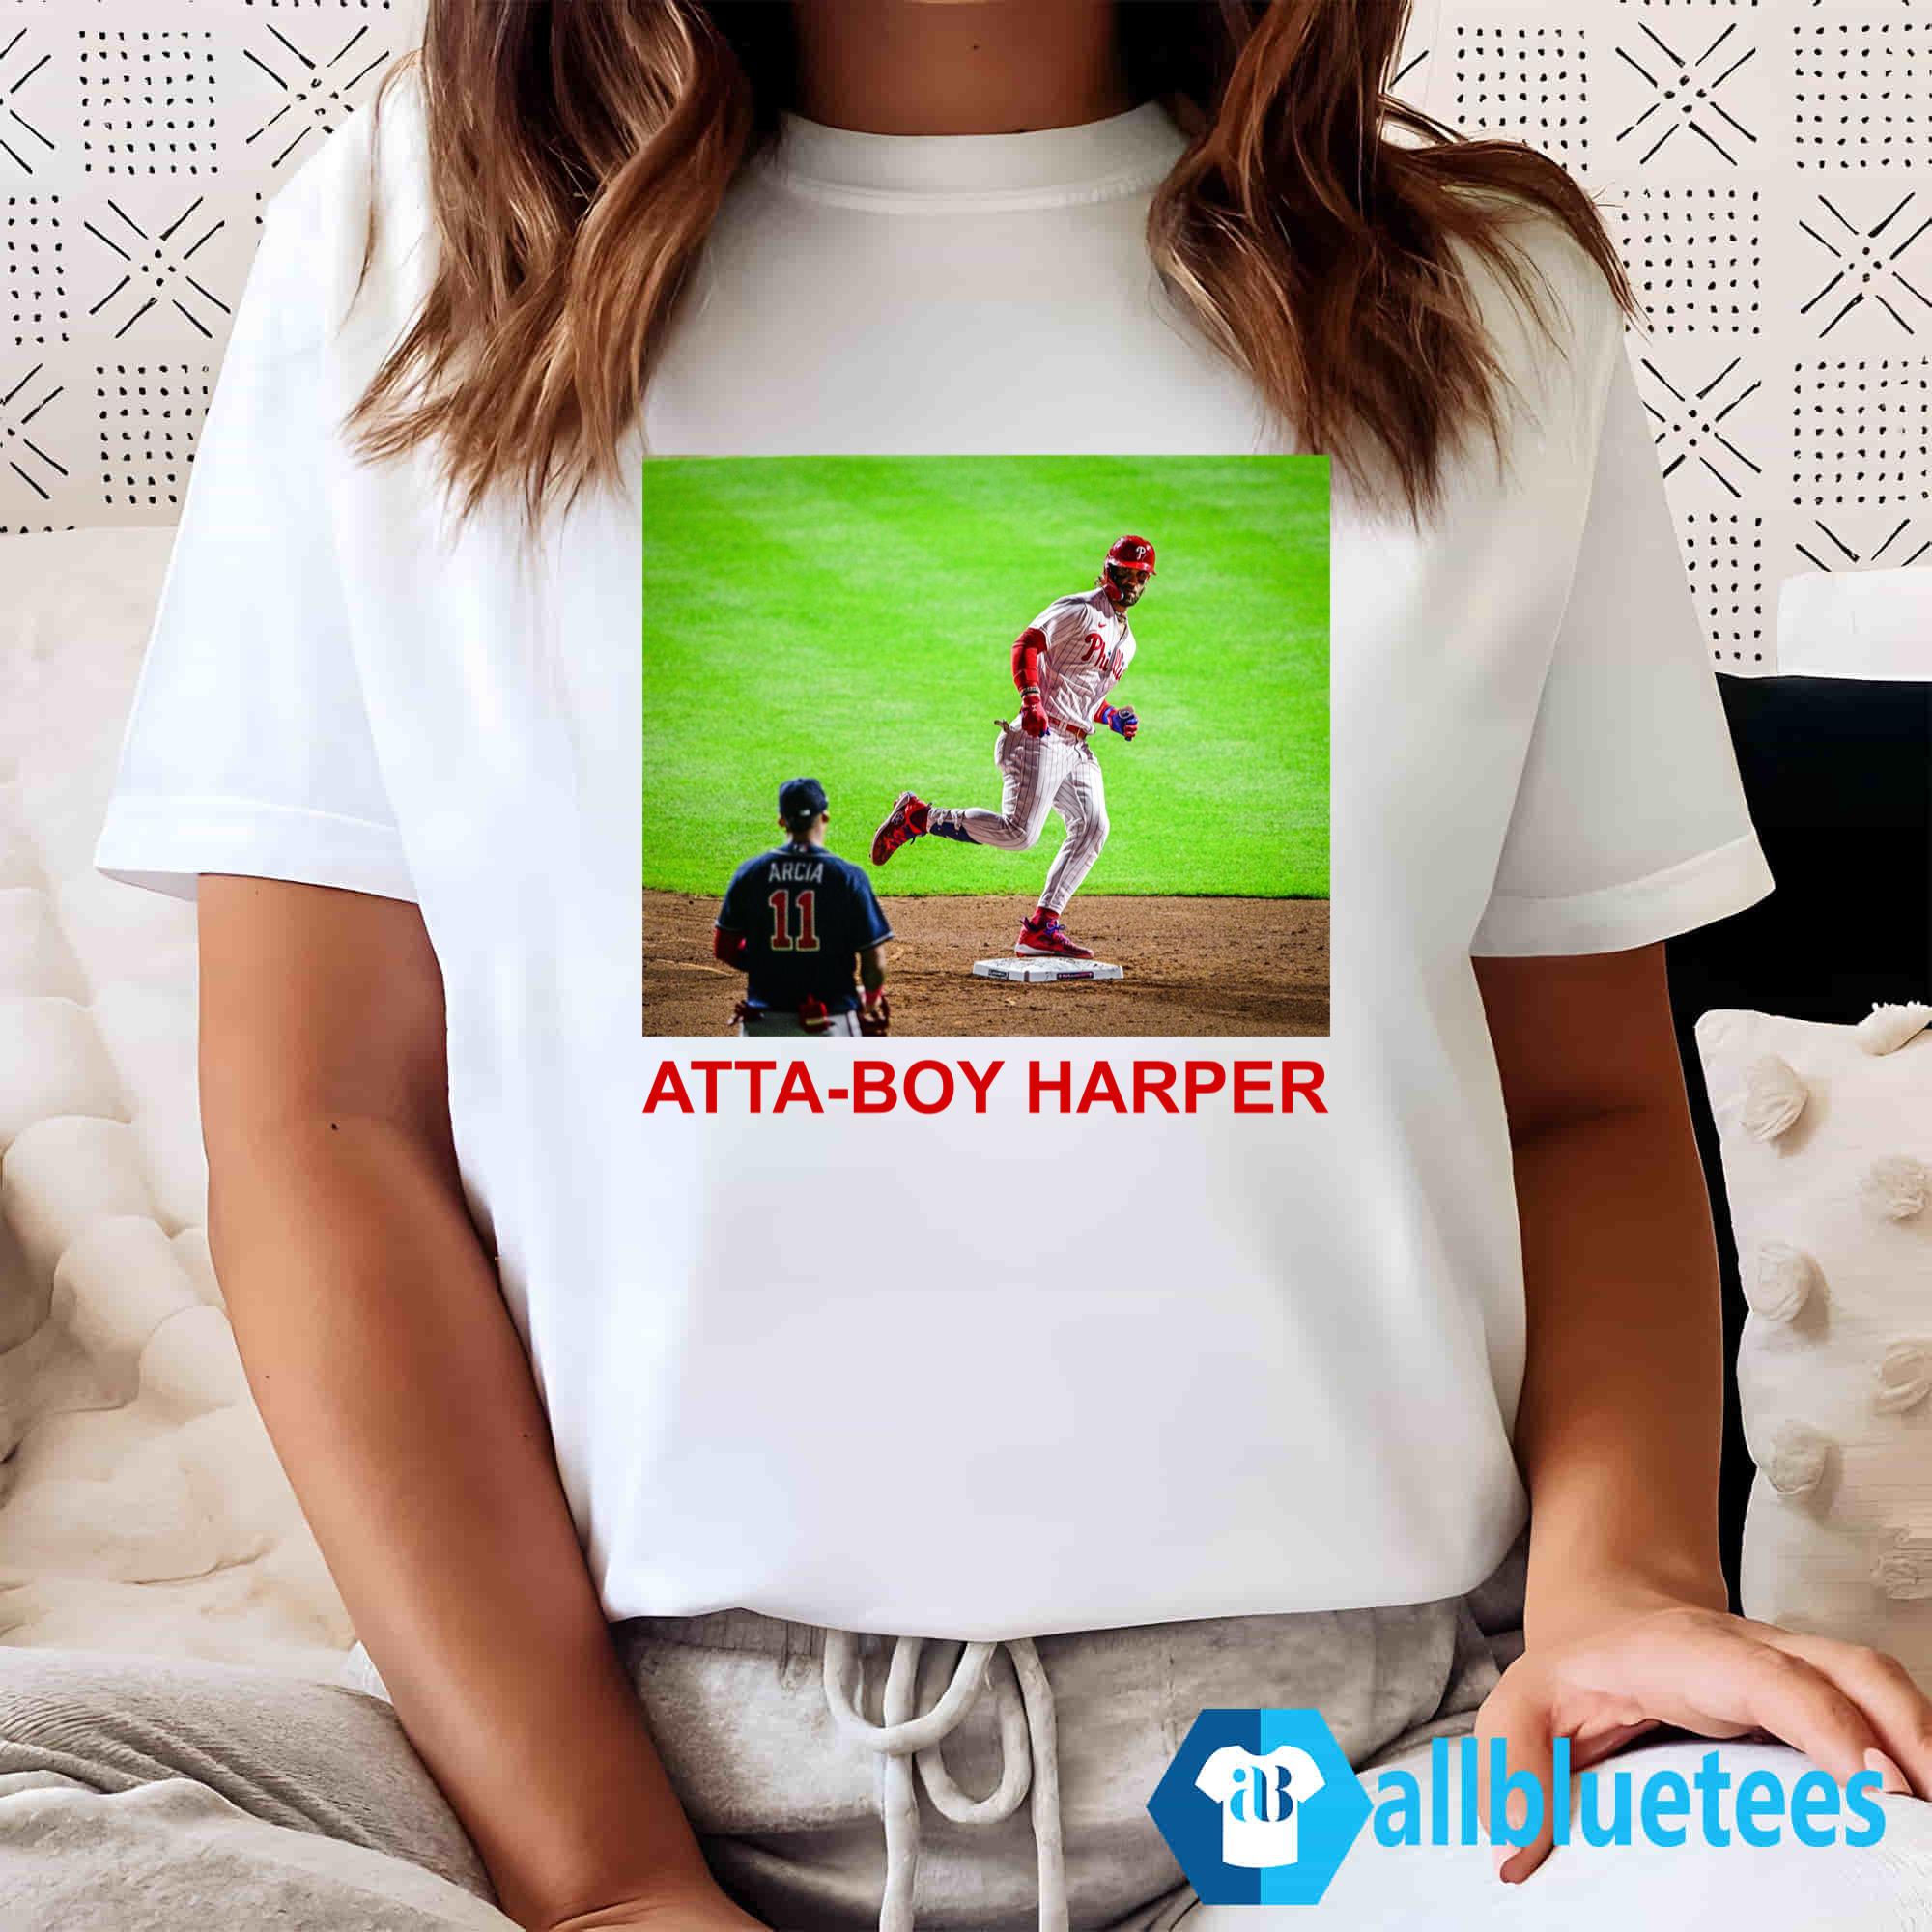 bryce harper shirt womens